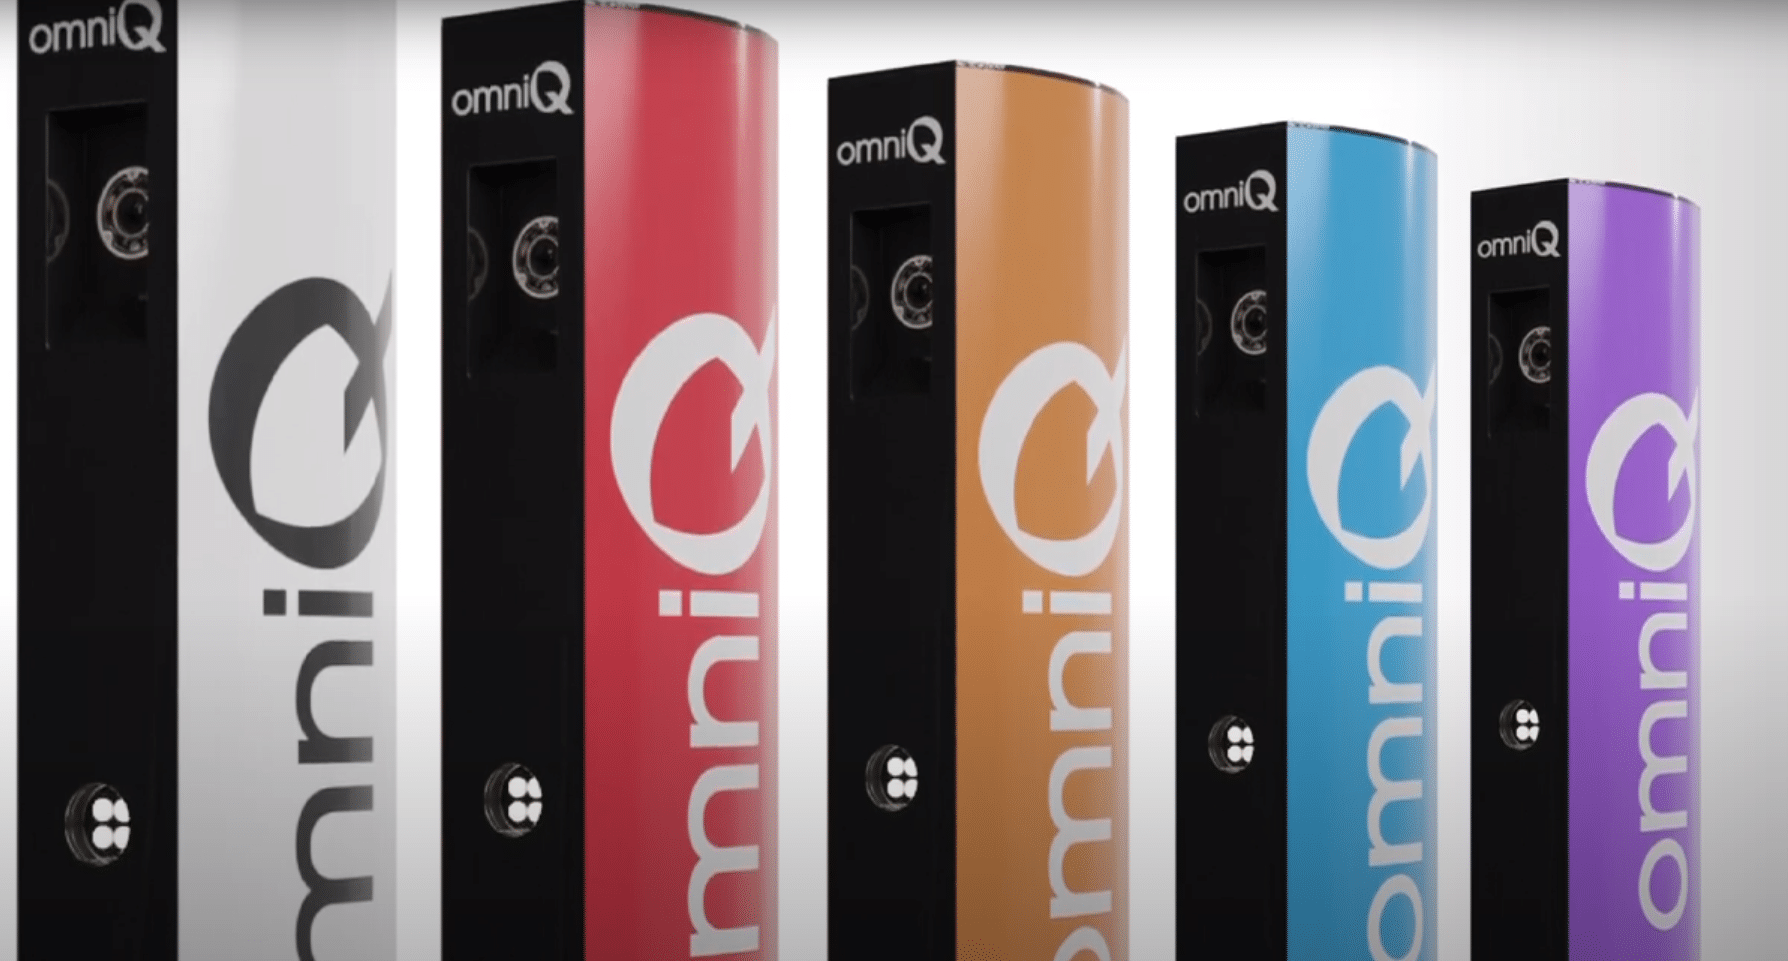 omniq vrs in multiple colors